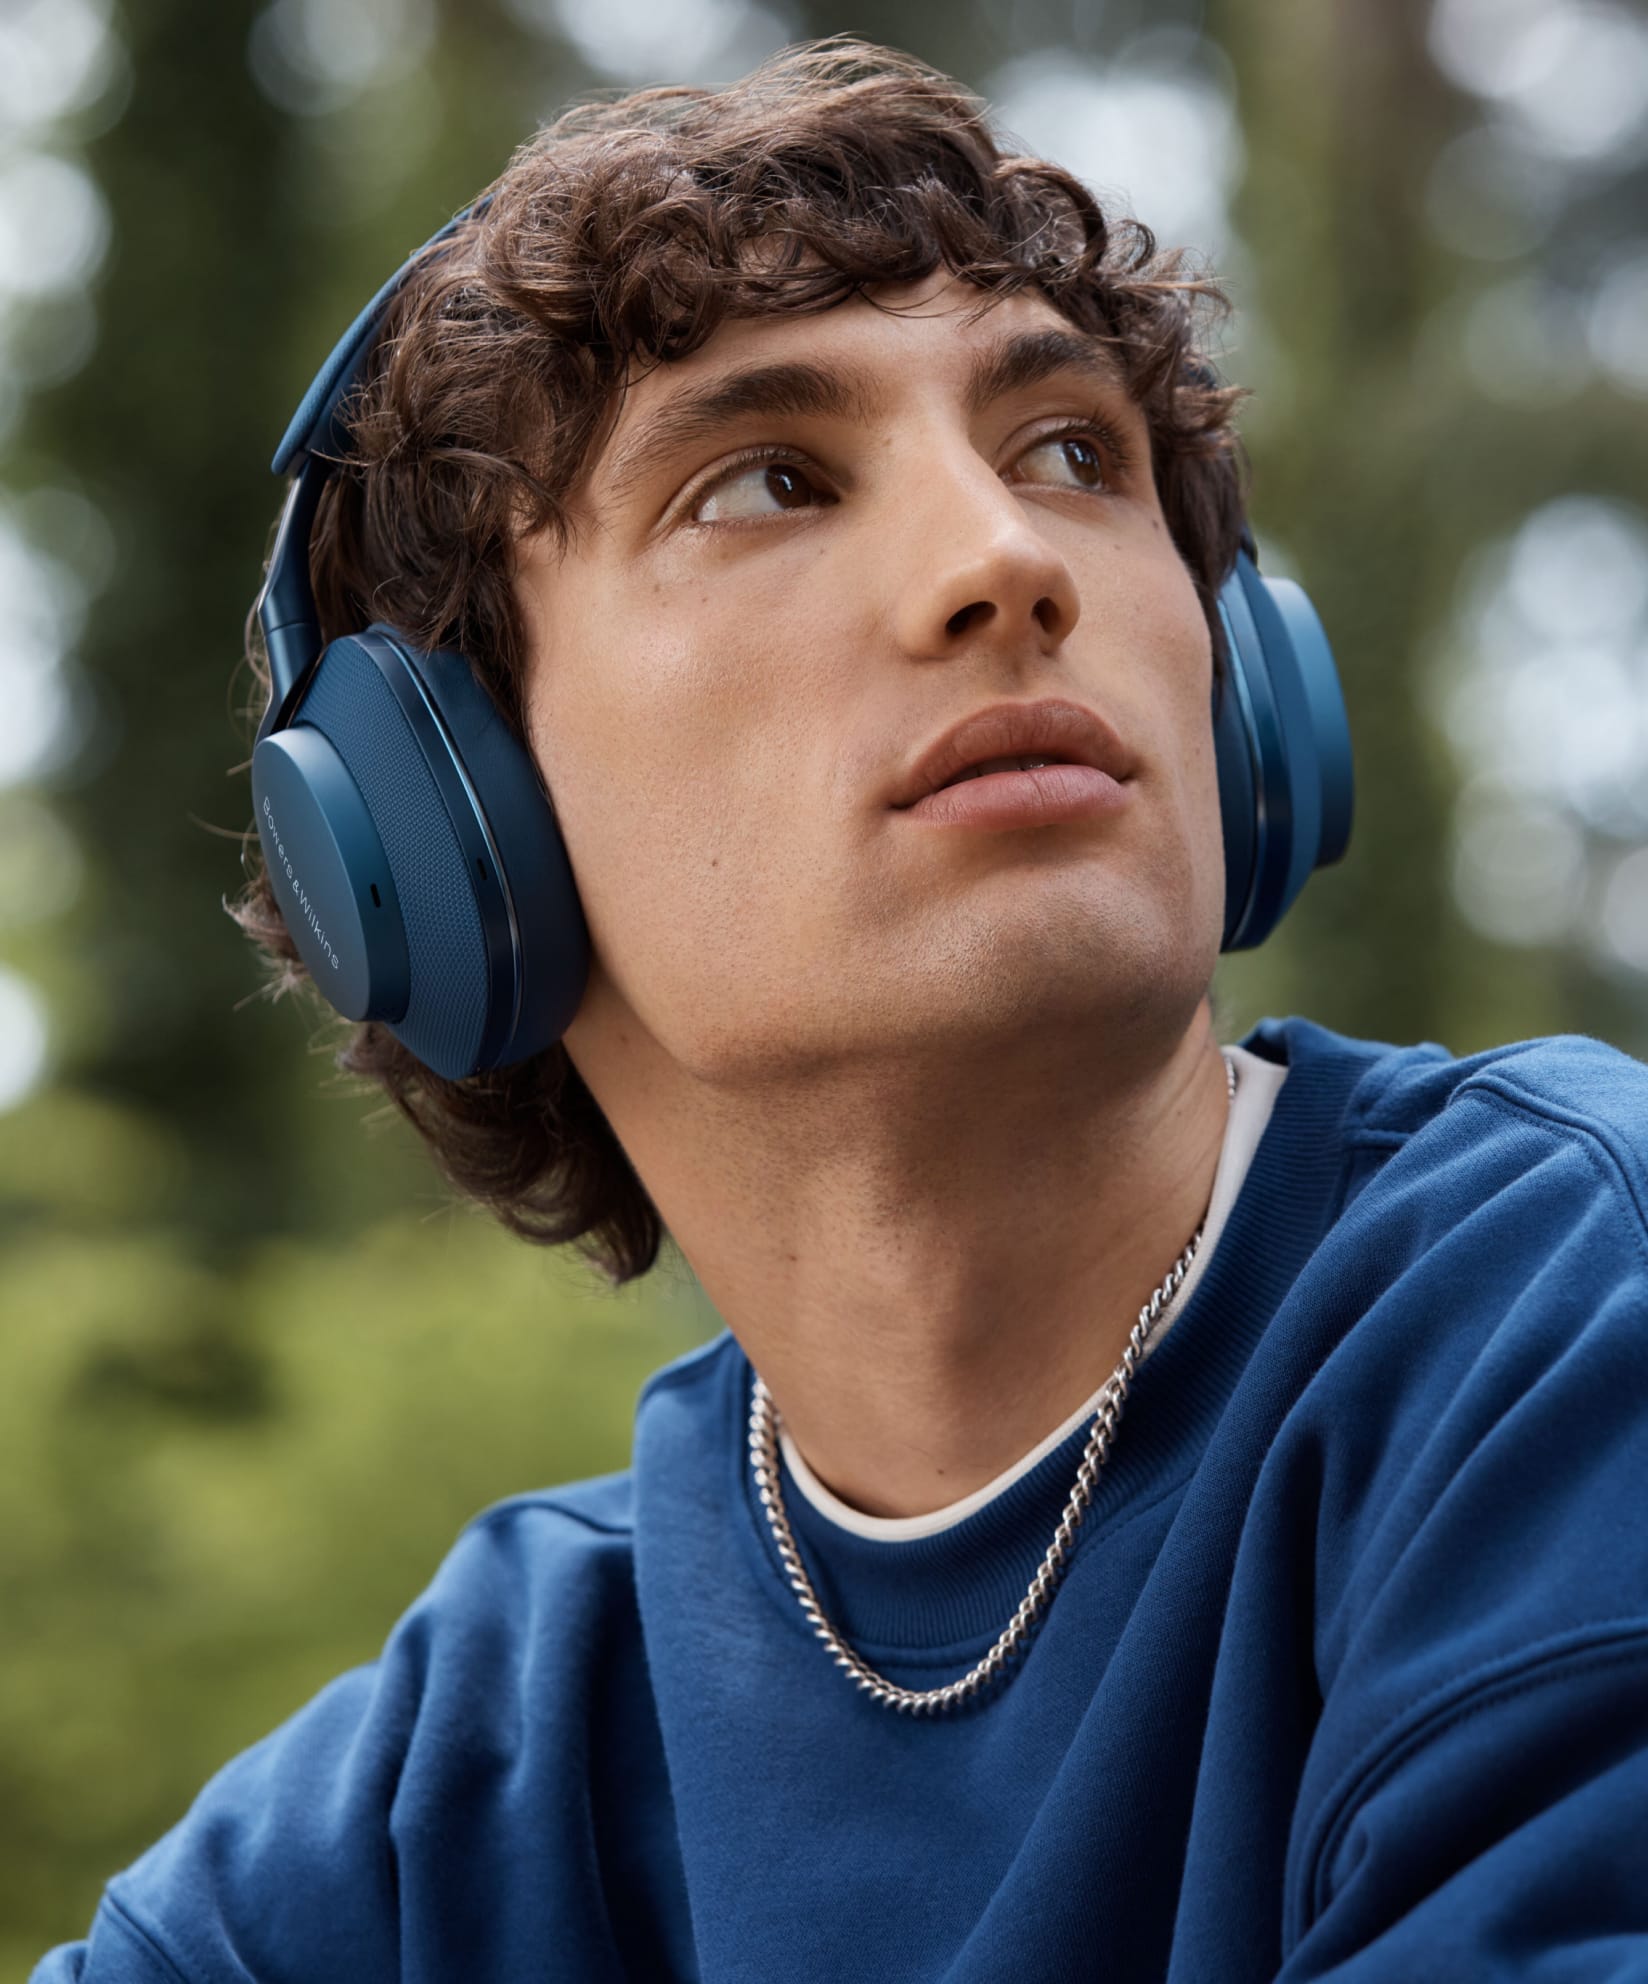 Px7 S2e (Evolved) Over-Ear Headphones | Bowers & Wilkins